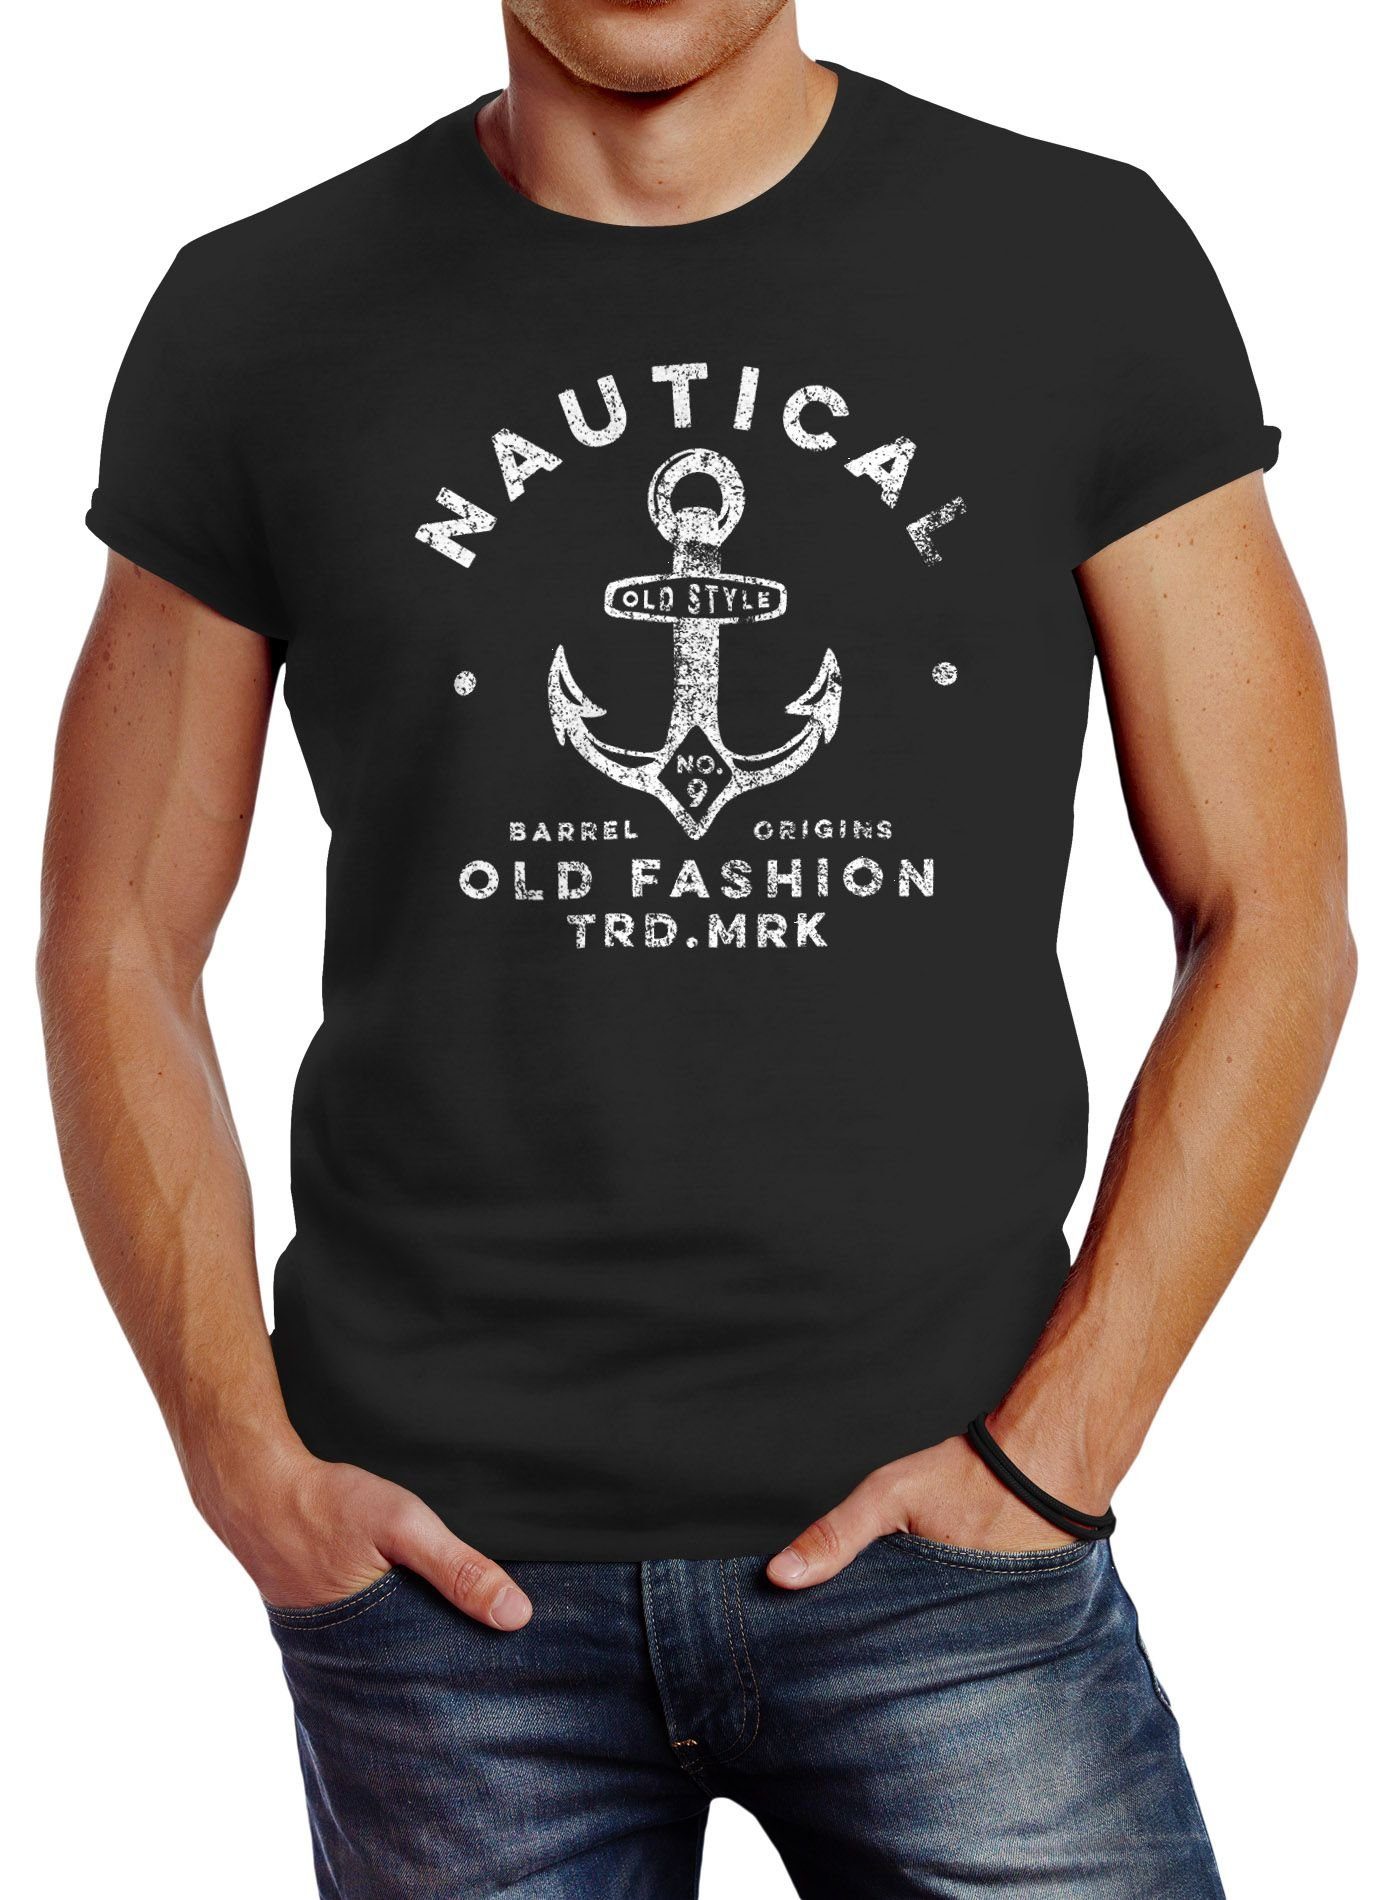 Neverless Print-Shirt Neverless® Herren T-Shirt Anker Motiv Schriftzug Nautical Old Fashion Retro Design Fashion Streetstyle mit Print schwarz